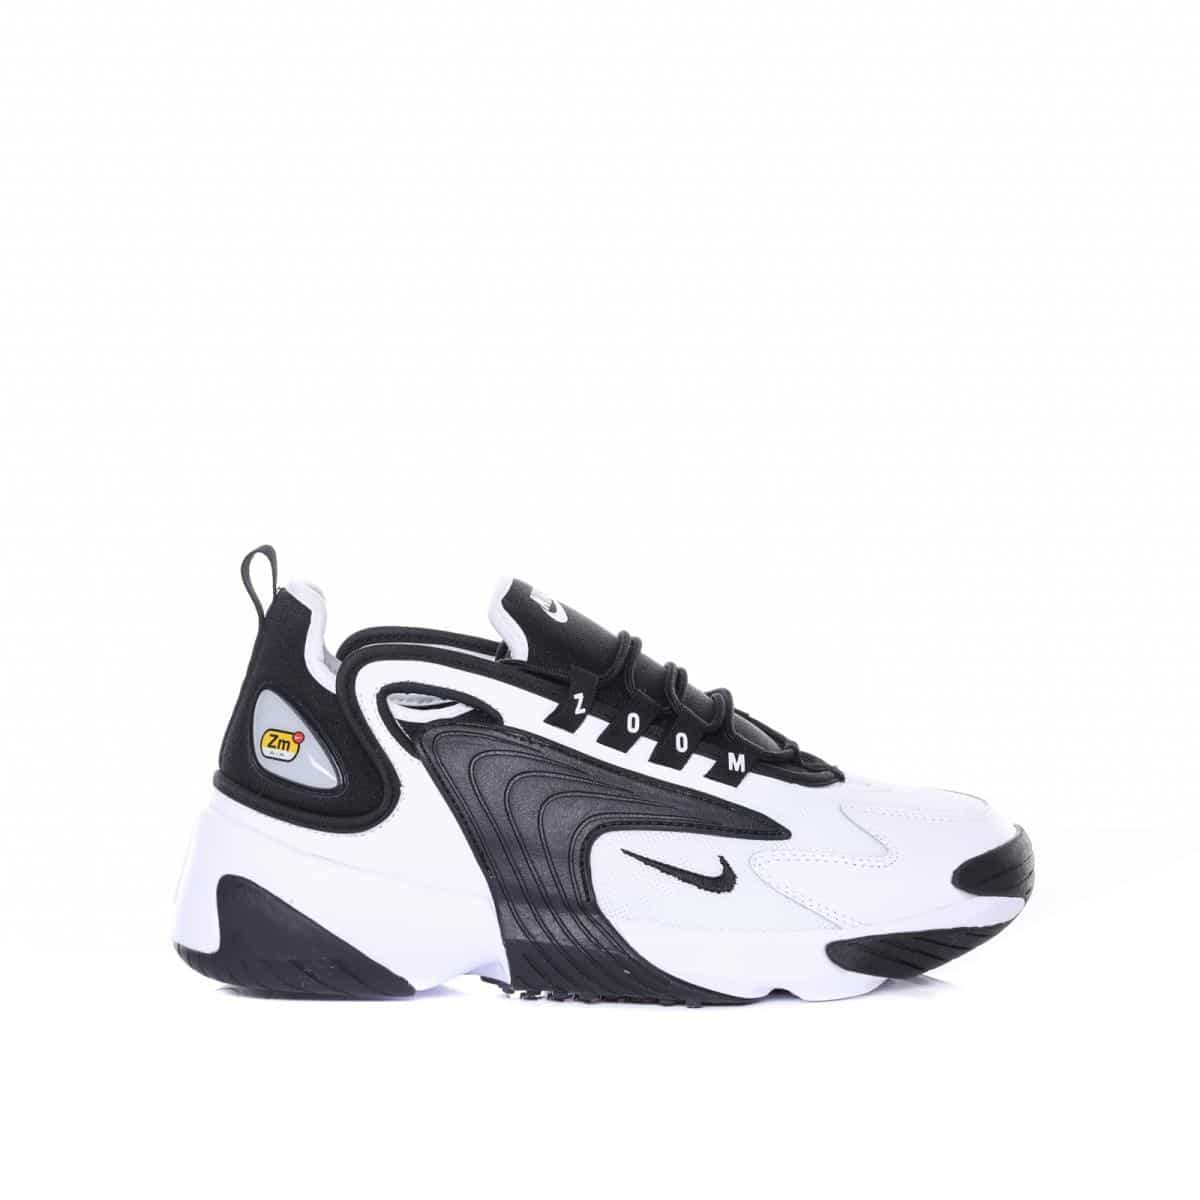 Scarpa da ginnastica uomo Nike Zoom 2k colore bianco nero A00269 101 | eBay